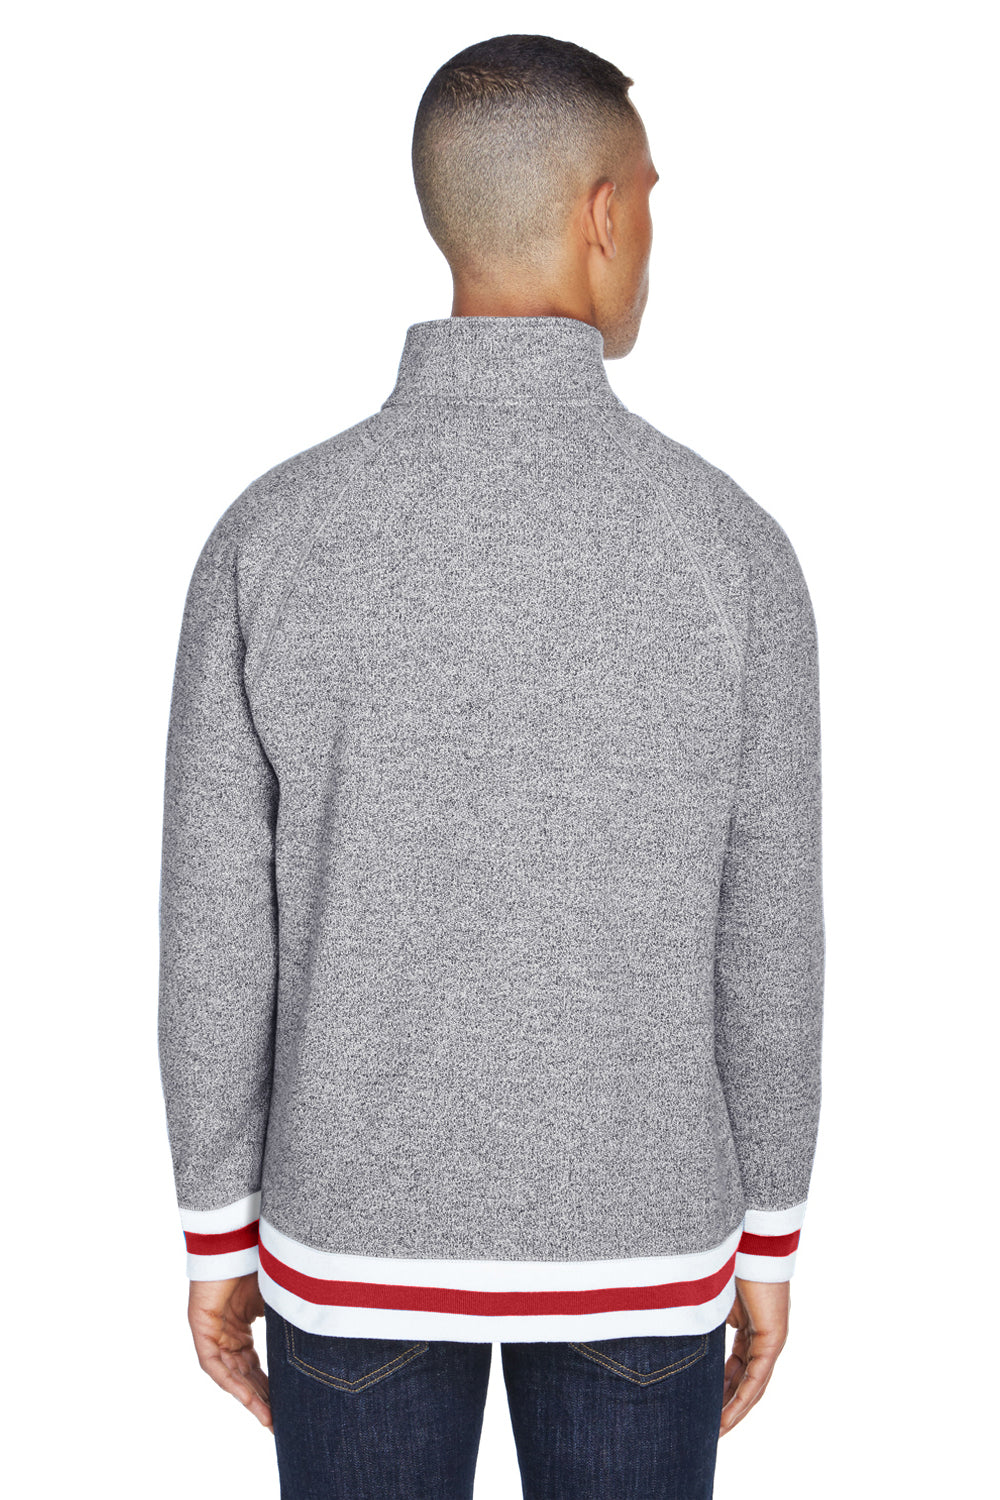 J America JA8703 Mens Peppered Fleece 1/4 Zip Sweatshirt Grey/Red Back